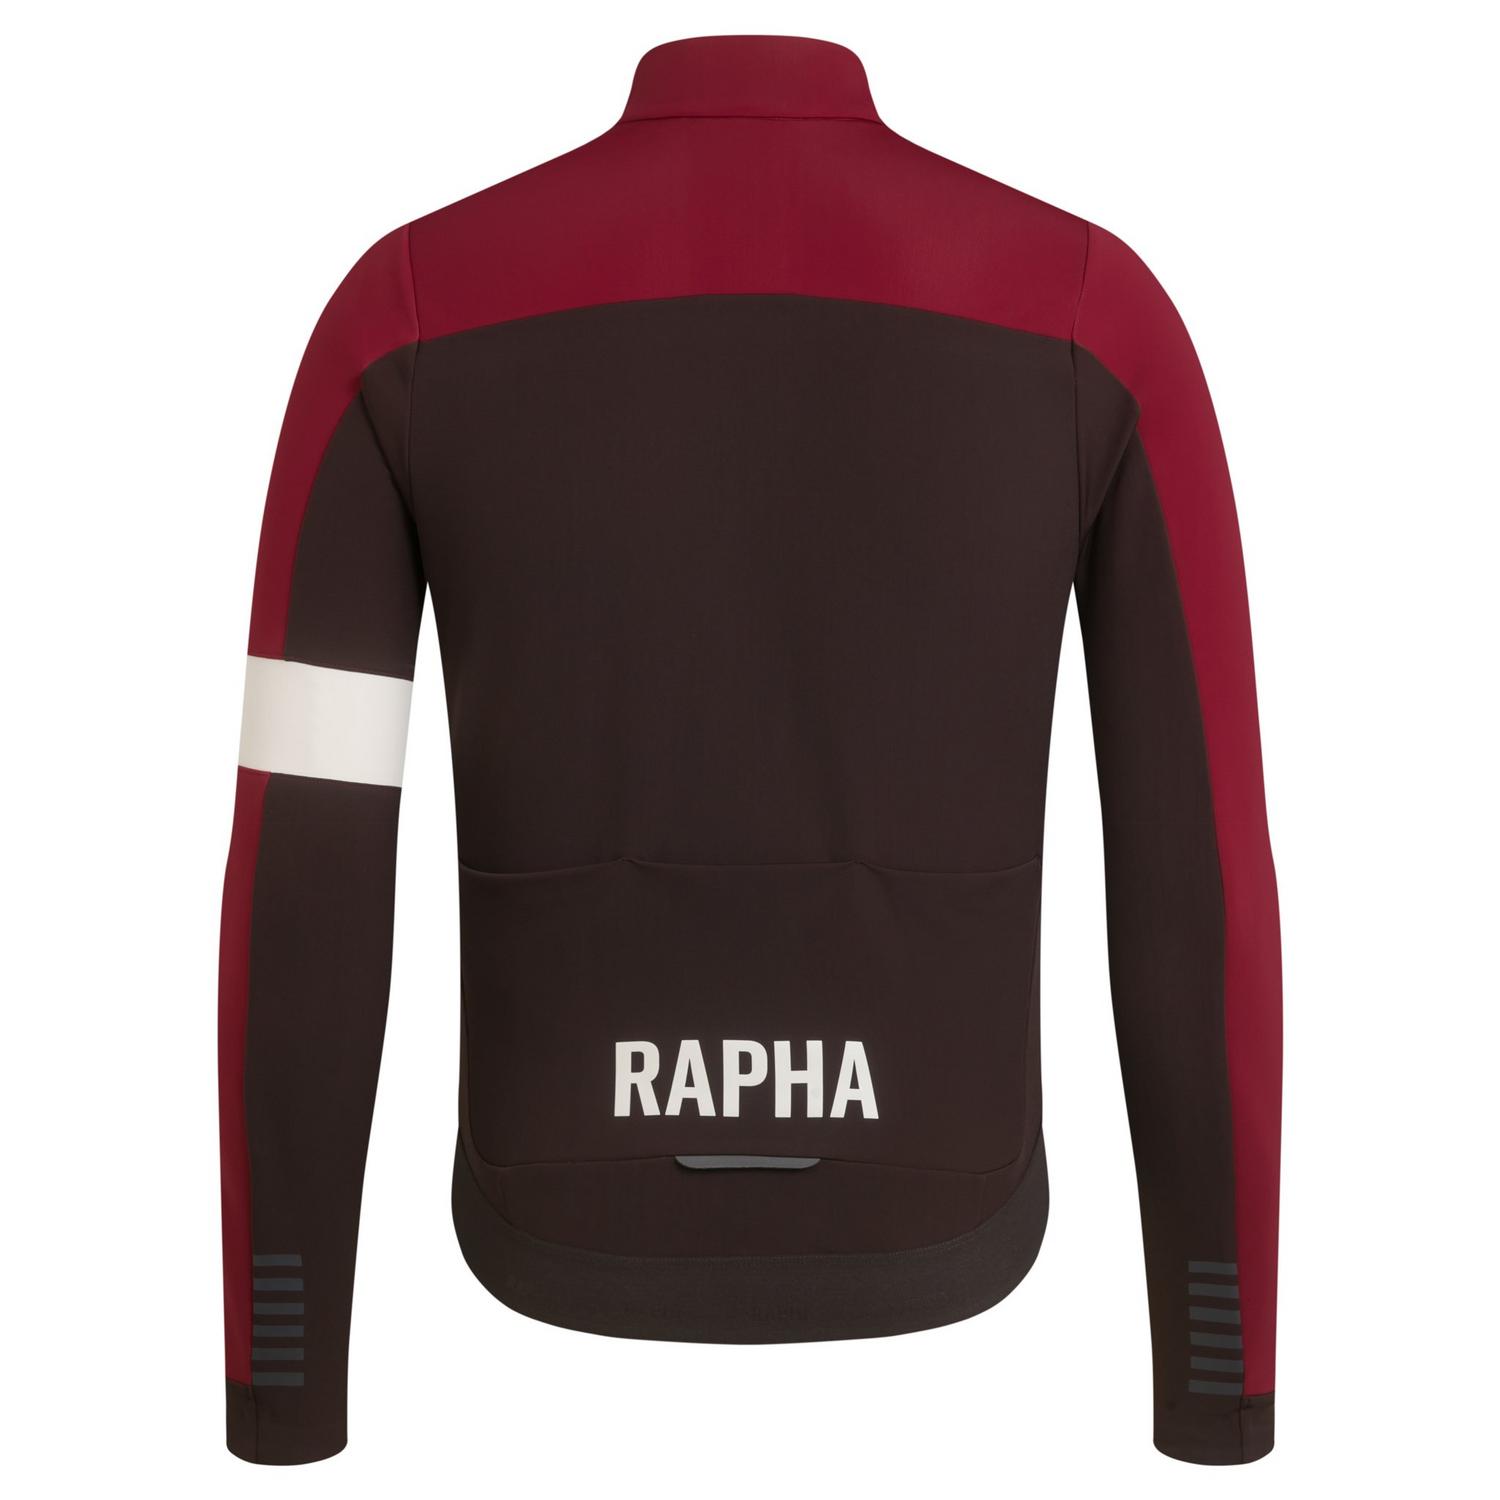 Rapha Women's Pro Team Winter Jacket - La Bicicletta Toronto